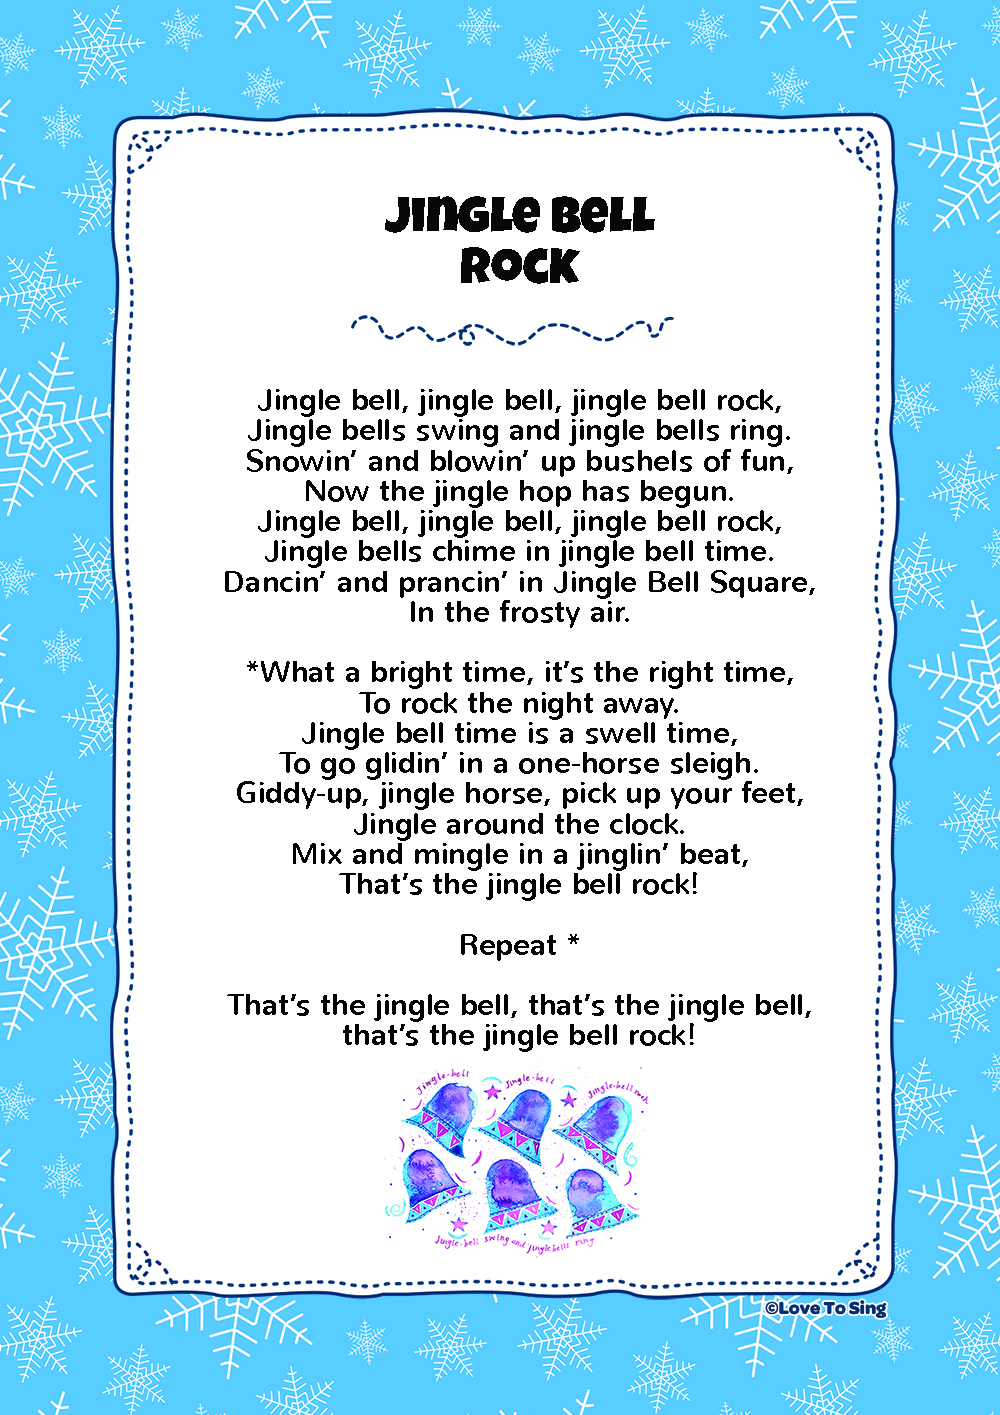 Jingle Bell Rock Kids Video Song with FREE Lyrics & Activities!